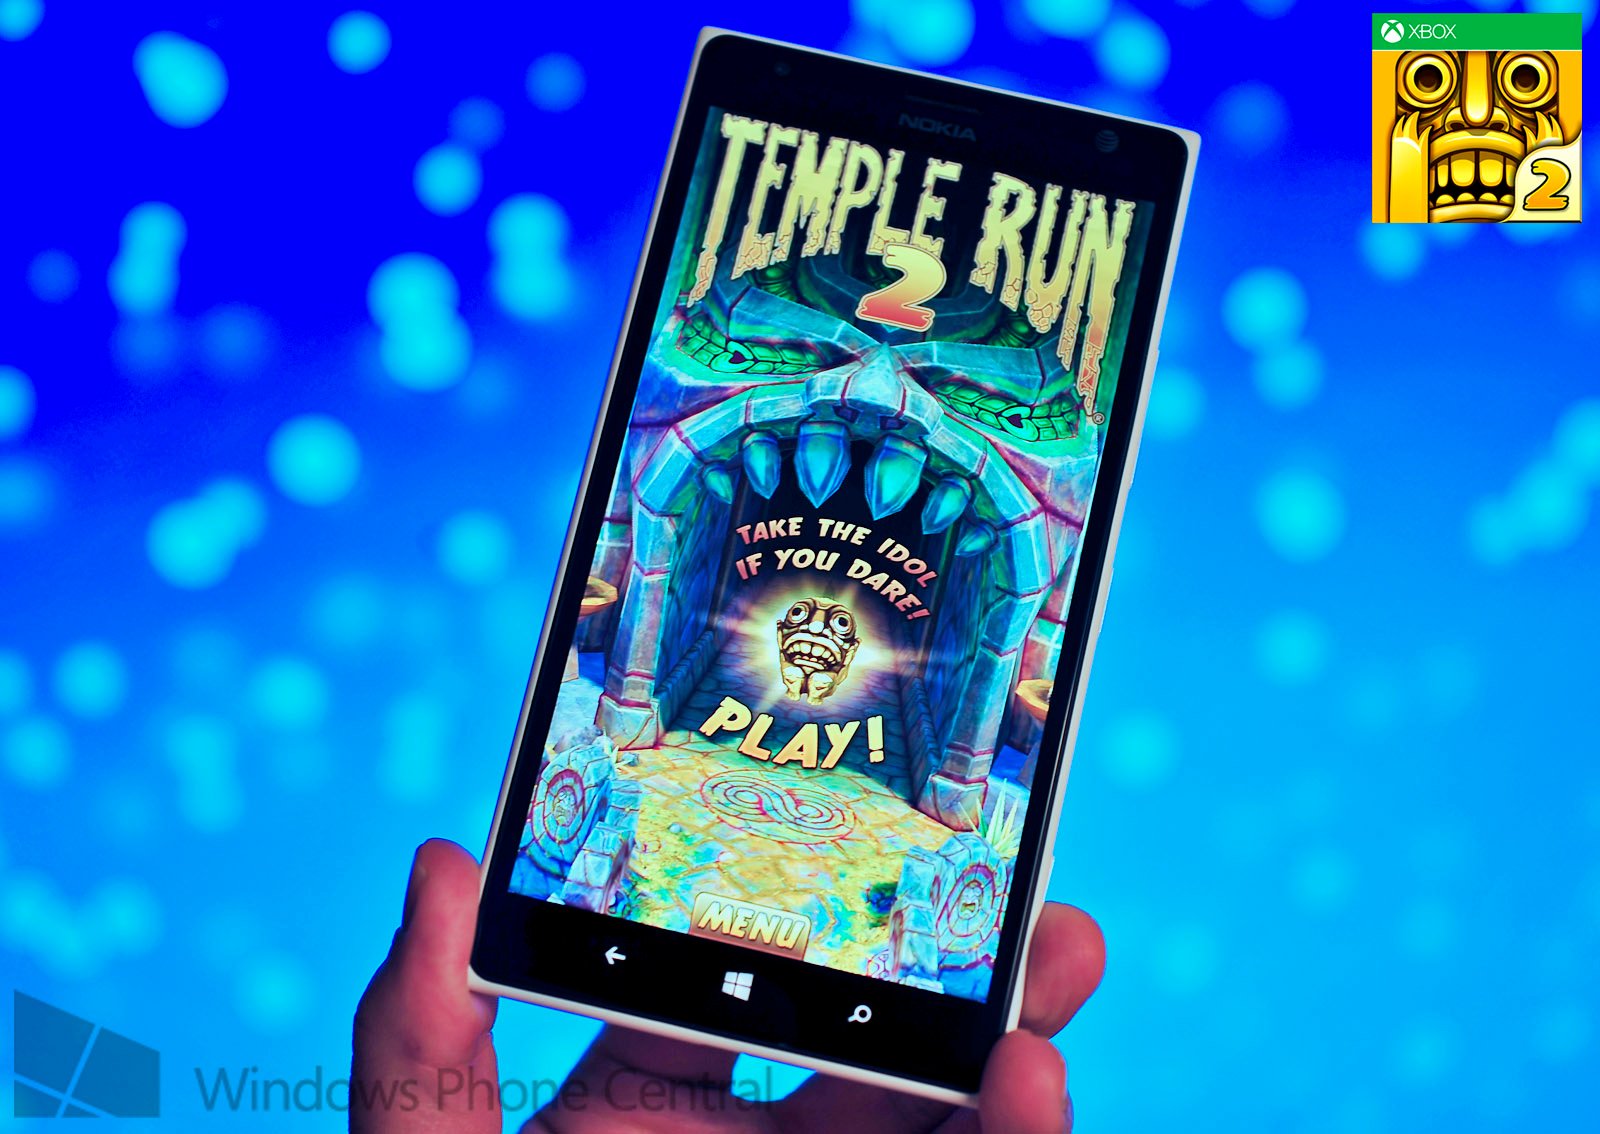 Temple run 2 install app